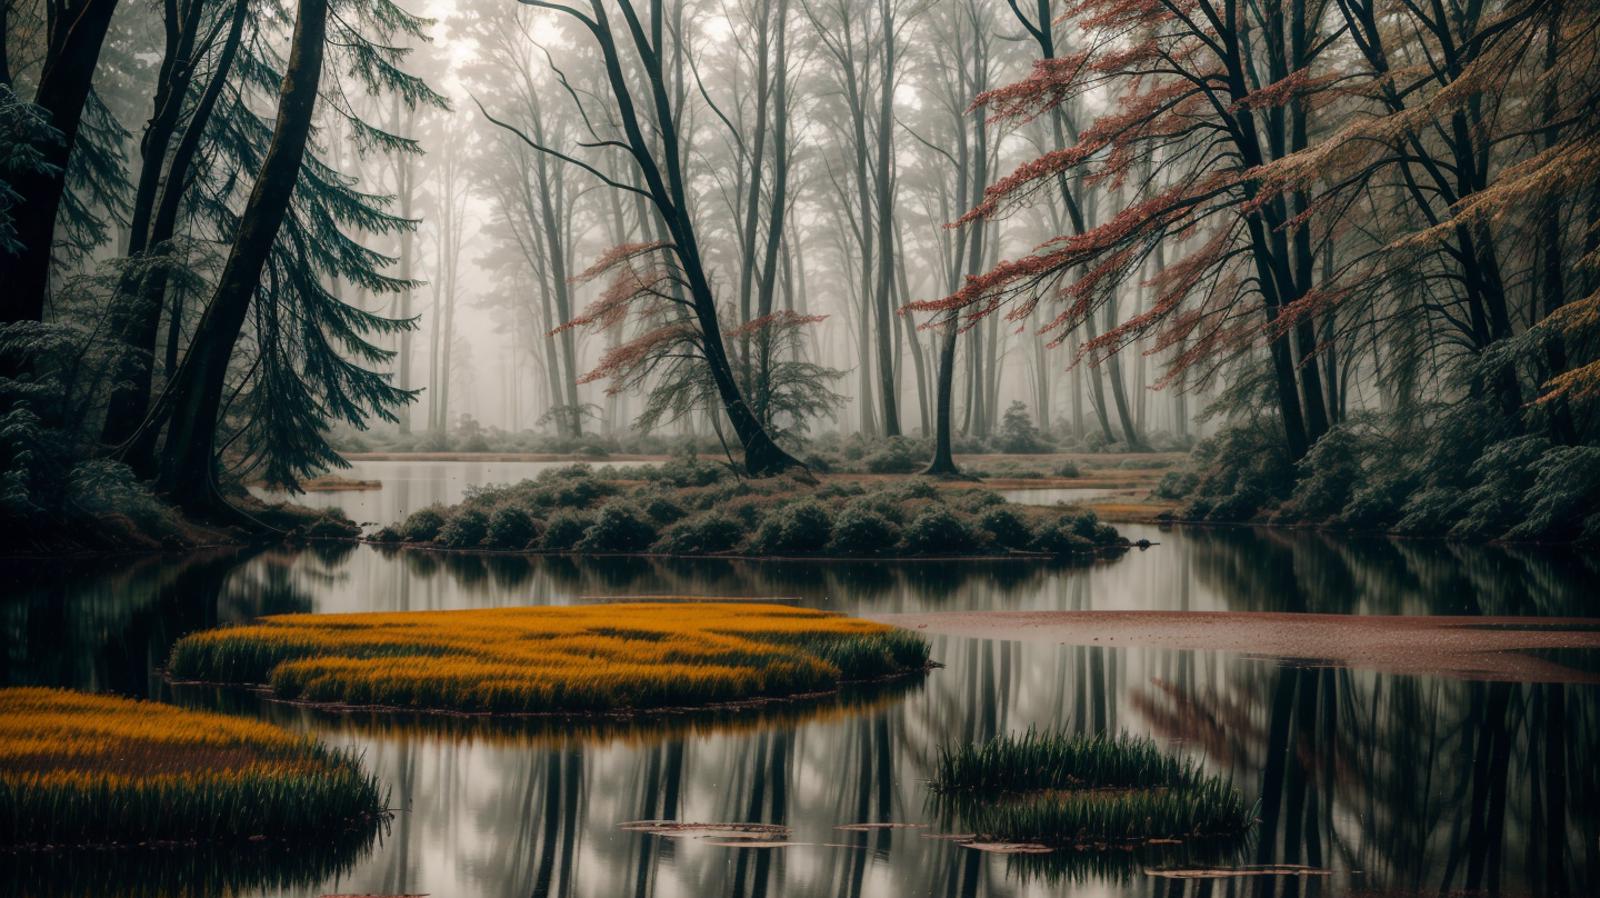 Landscape Realistic Pro image by Atryda